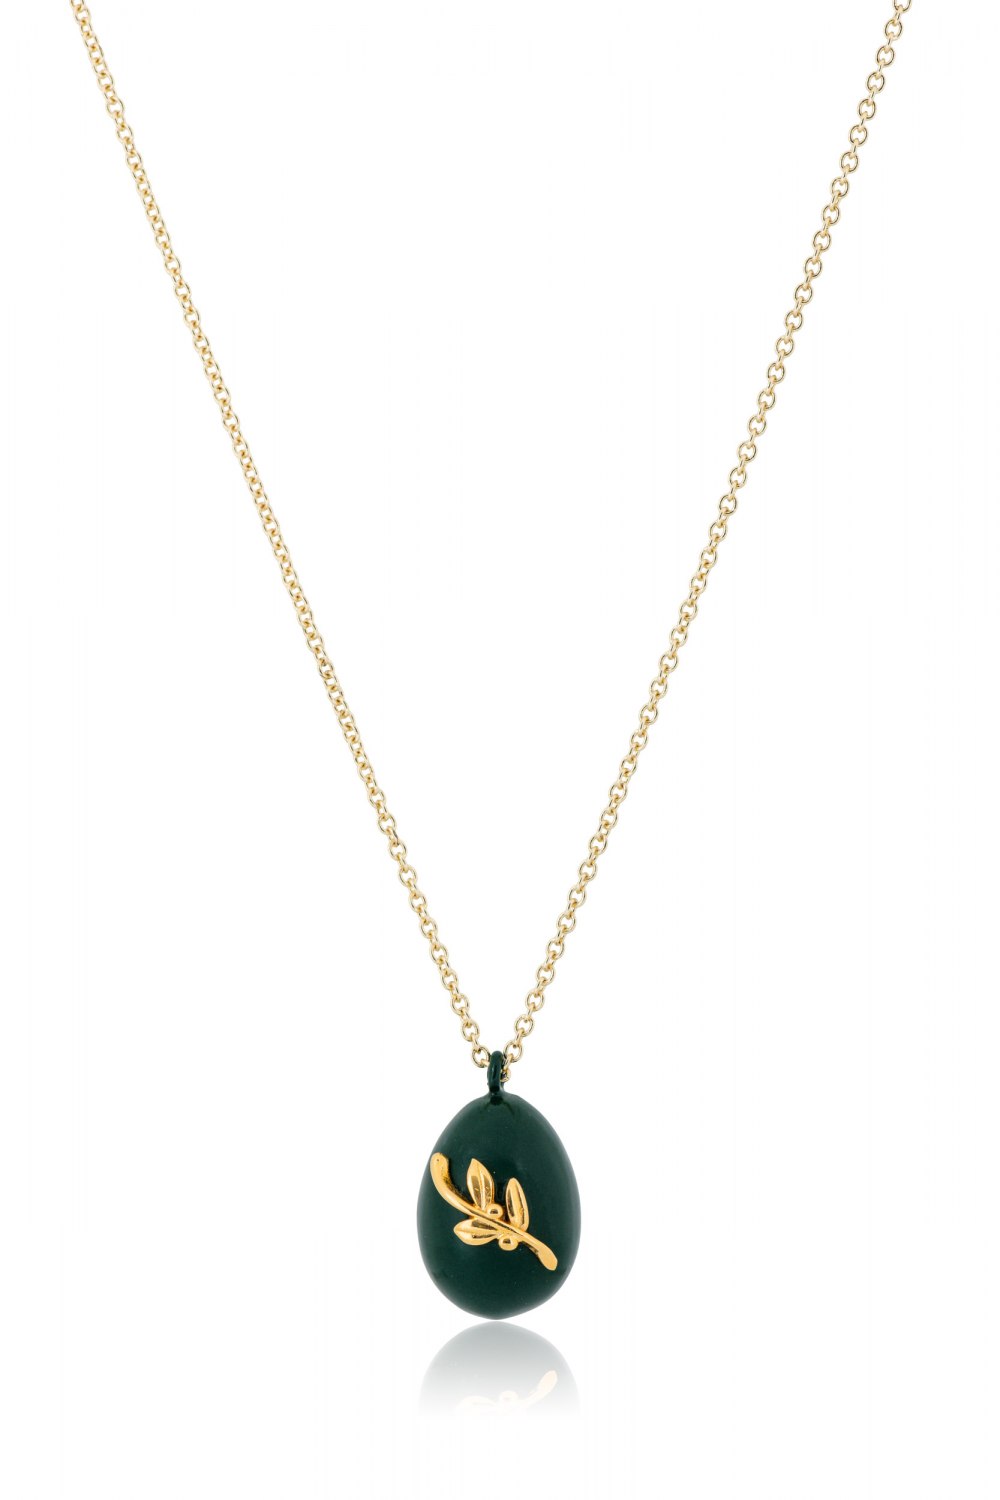 KESSARIS - Golden Leafy Easter Egg Pendant Necklace